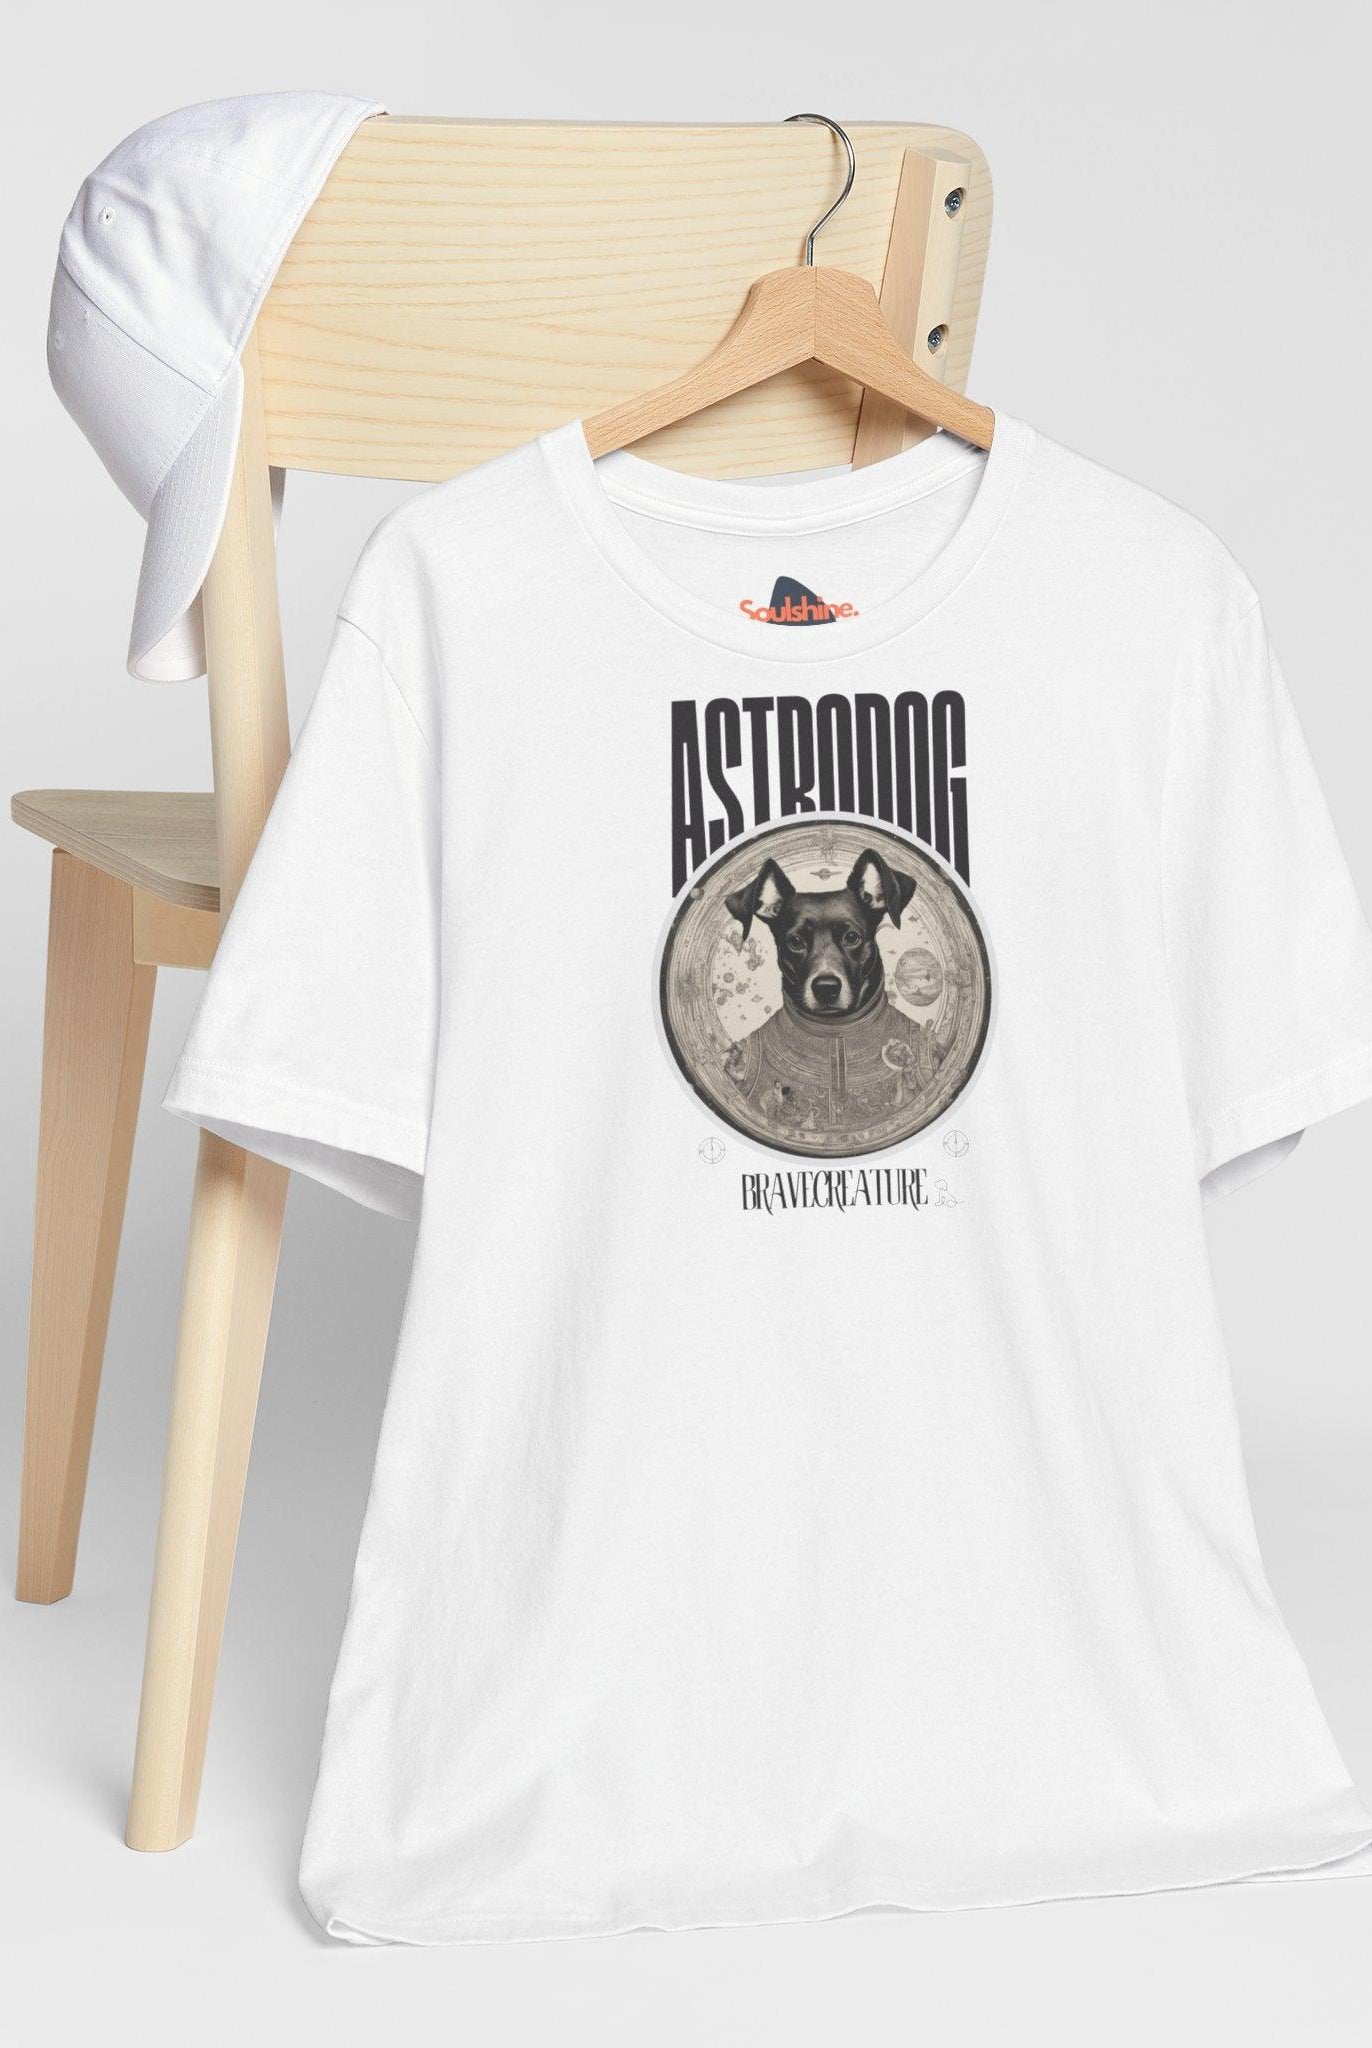 Astrodog - Soulshinecreators - Bella & Canvas - EU - Soulshinecreators